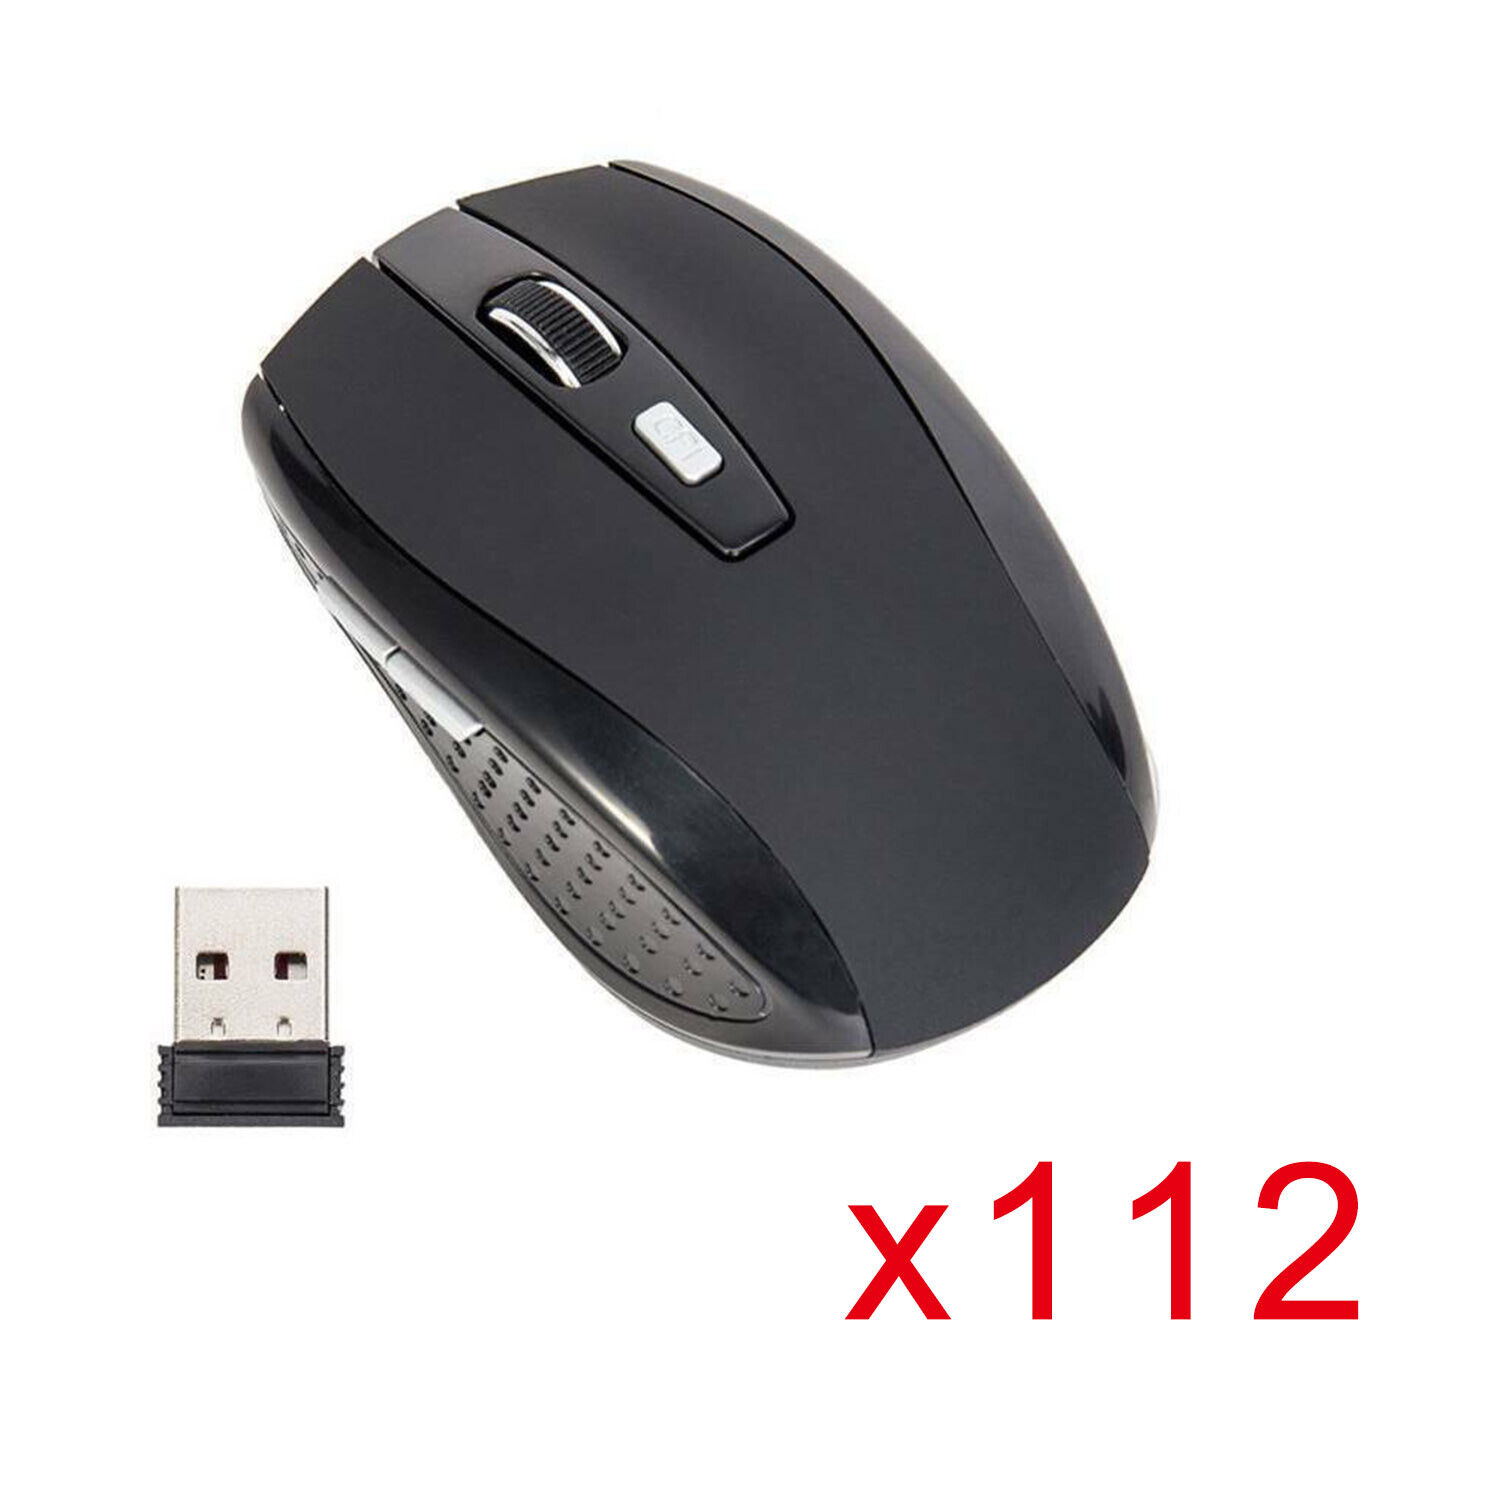 Bulk sale Lot of 112 2.4GHz Wireless Cordless Optical Mouse Mice USB PC Laptop